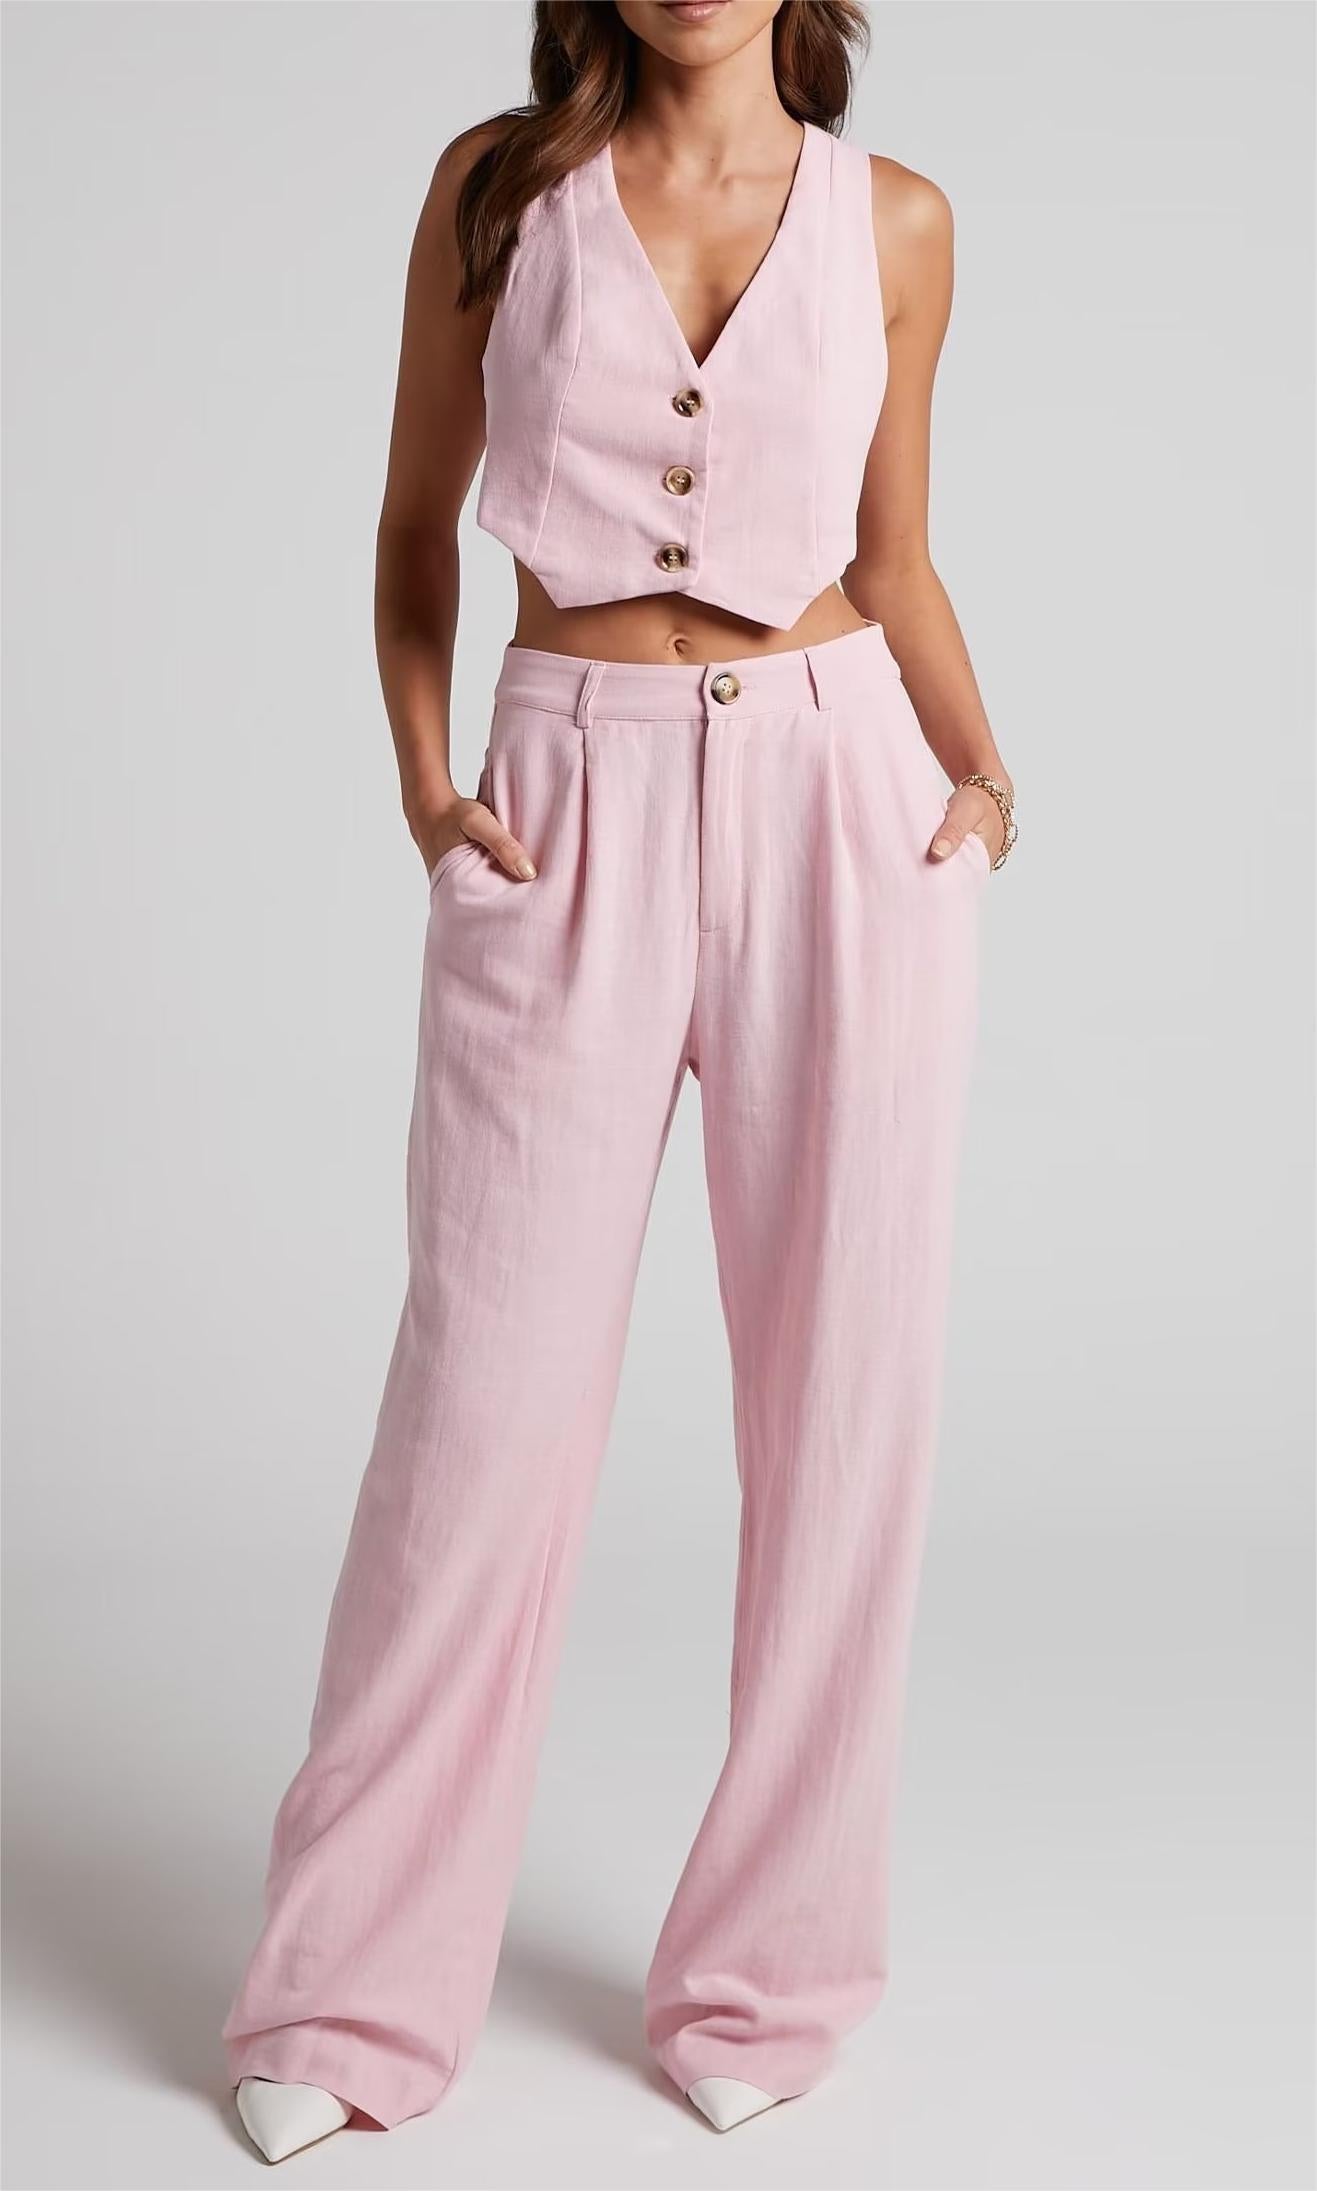 Summer Outfits  Light Pink Vest Wide Leg Pants Outfit 2-piece Set